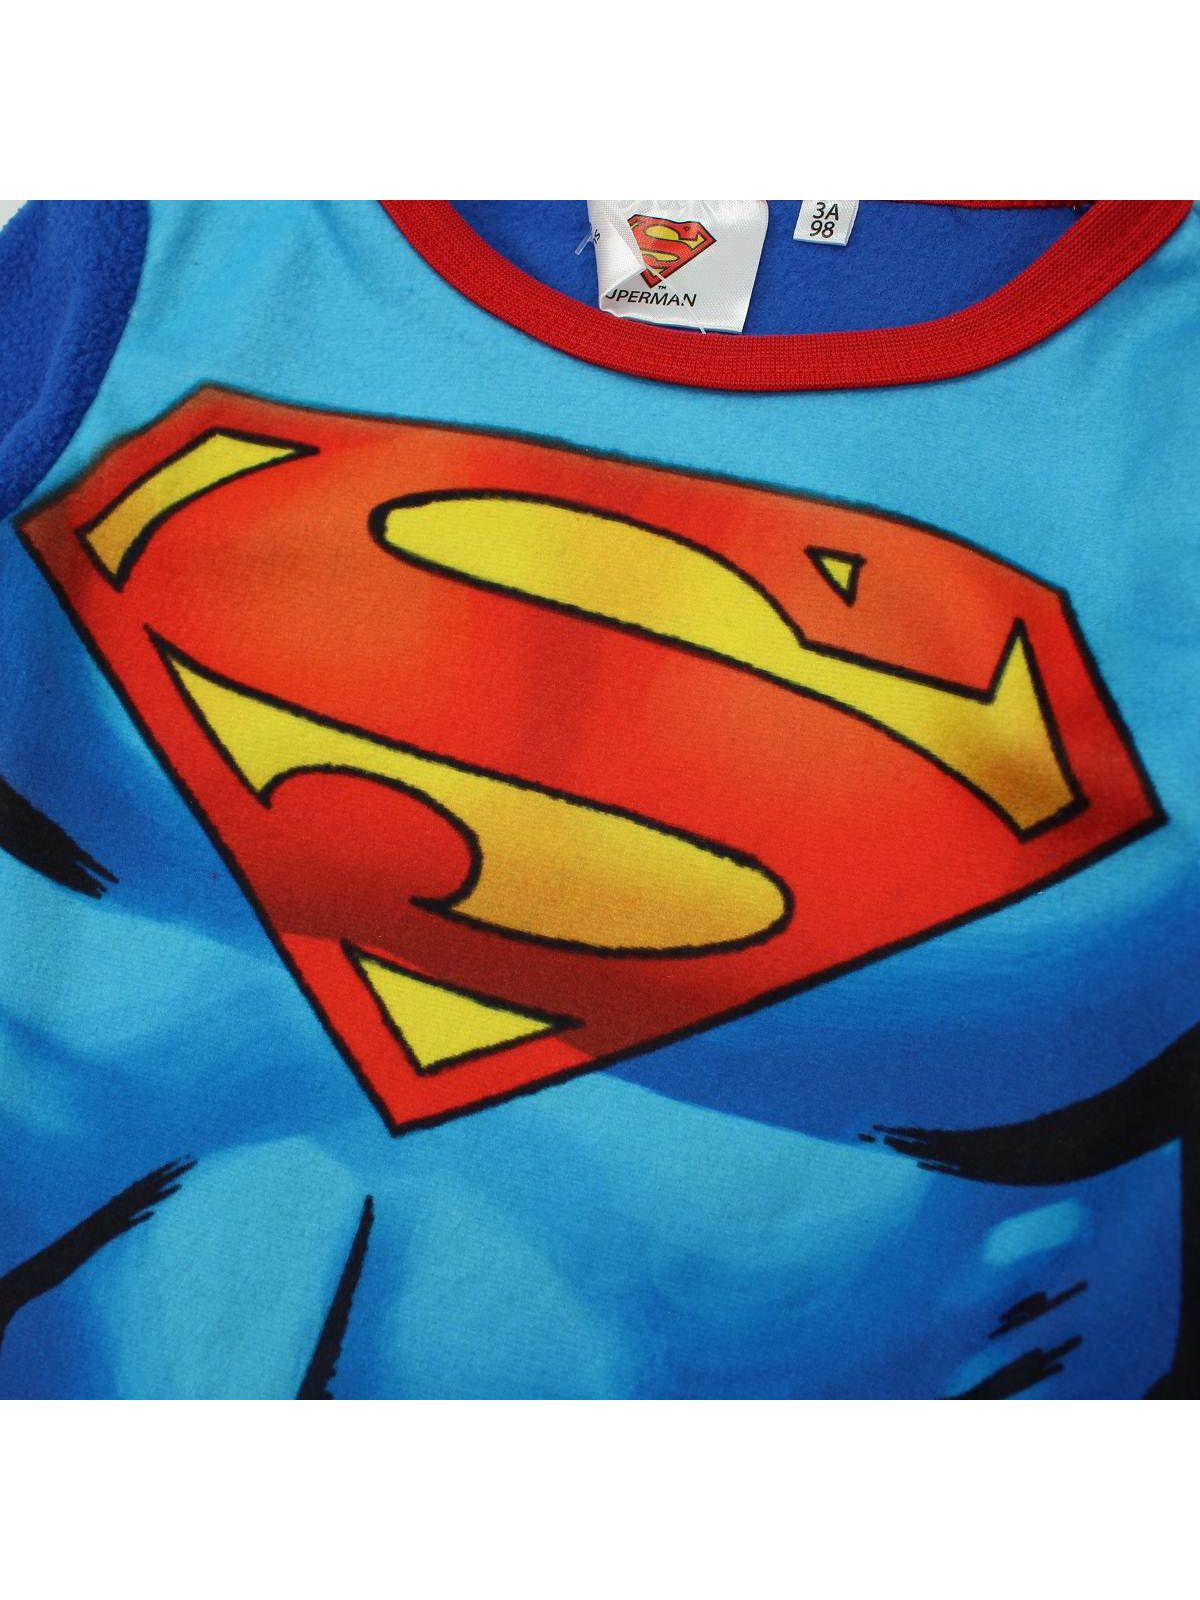 Superman pijama de lana